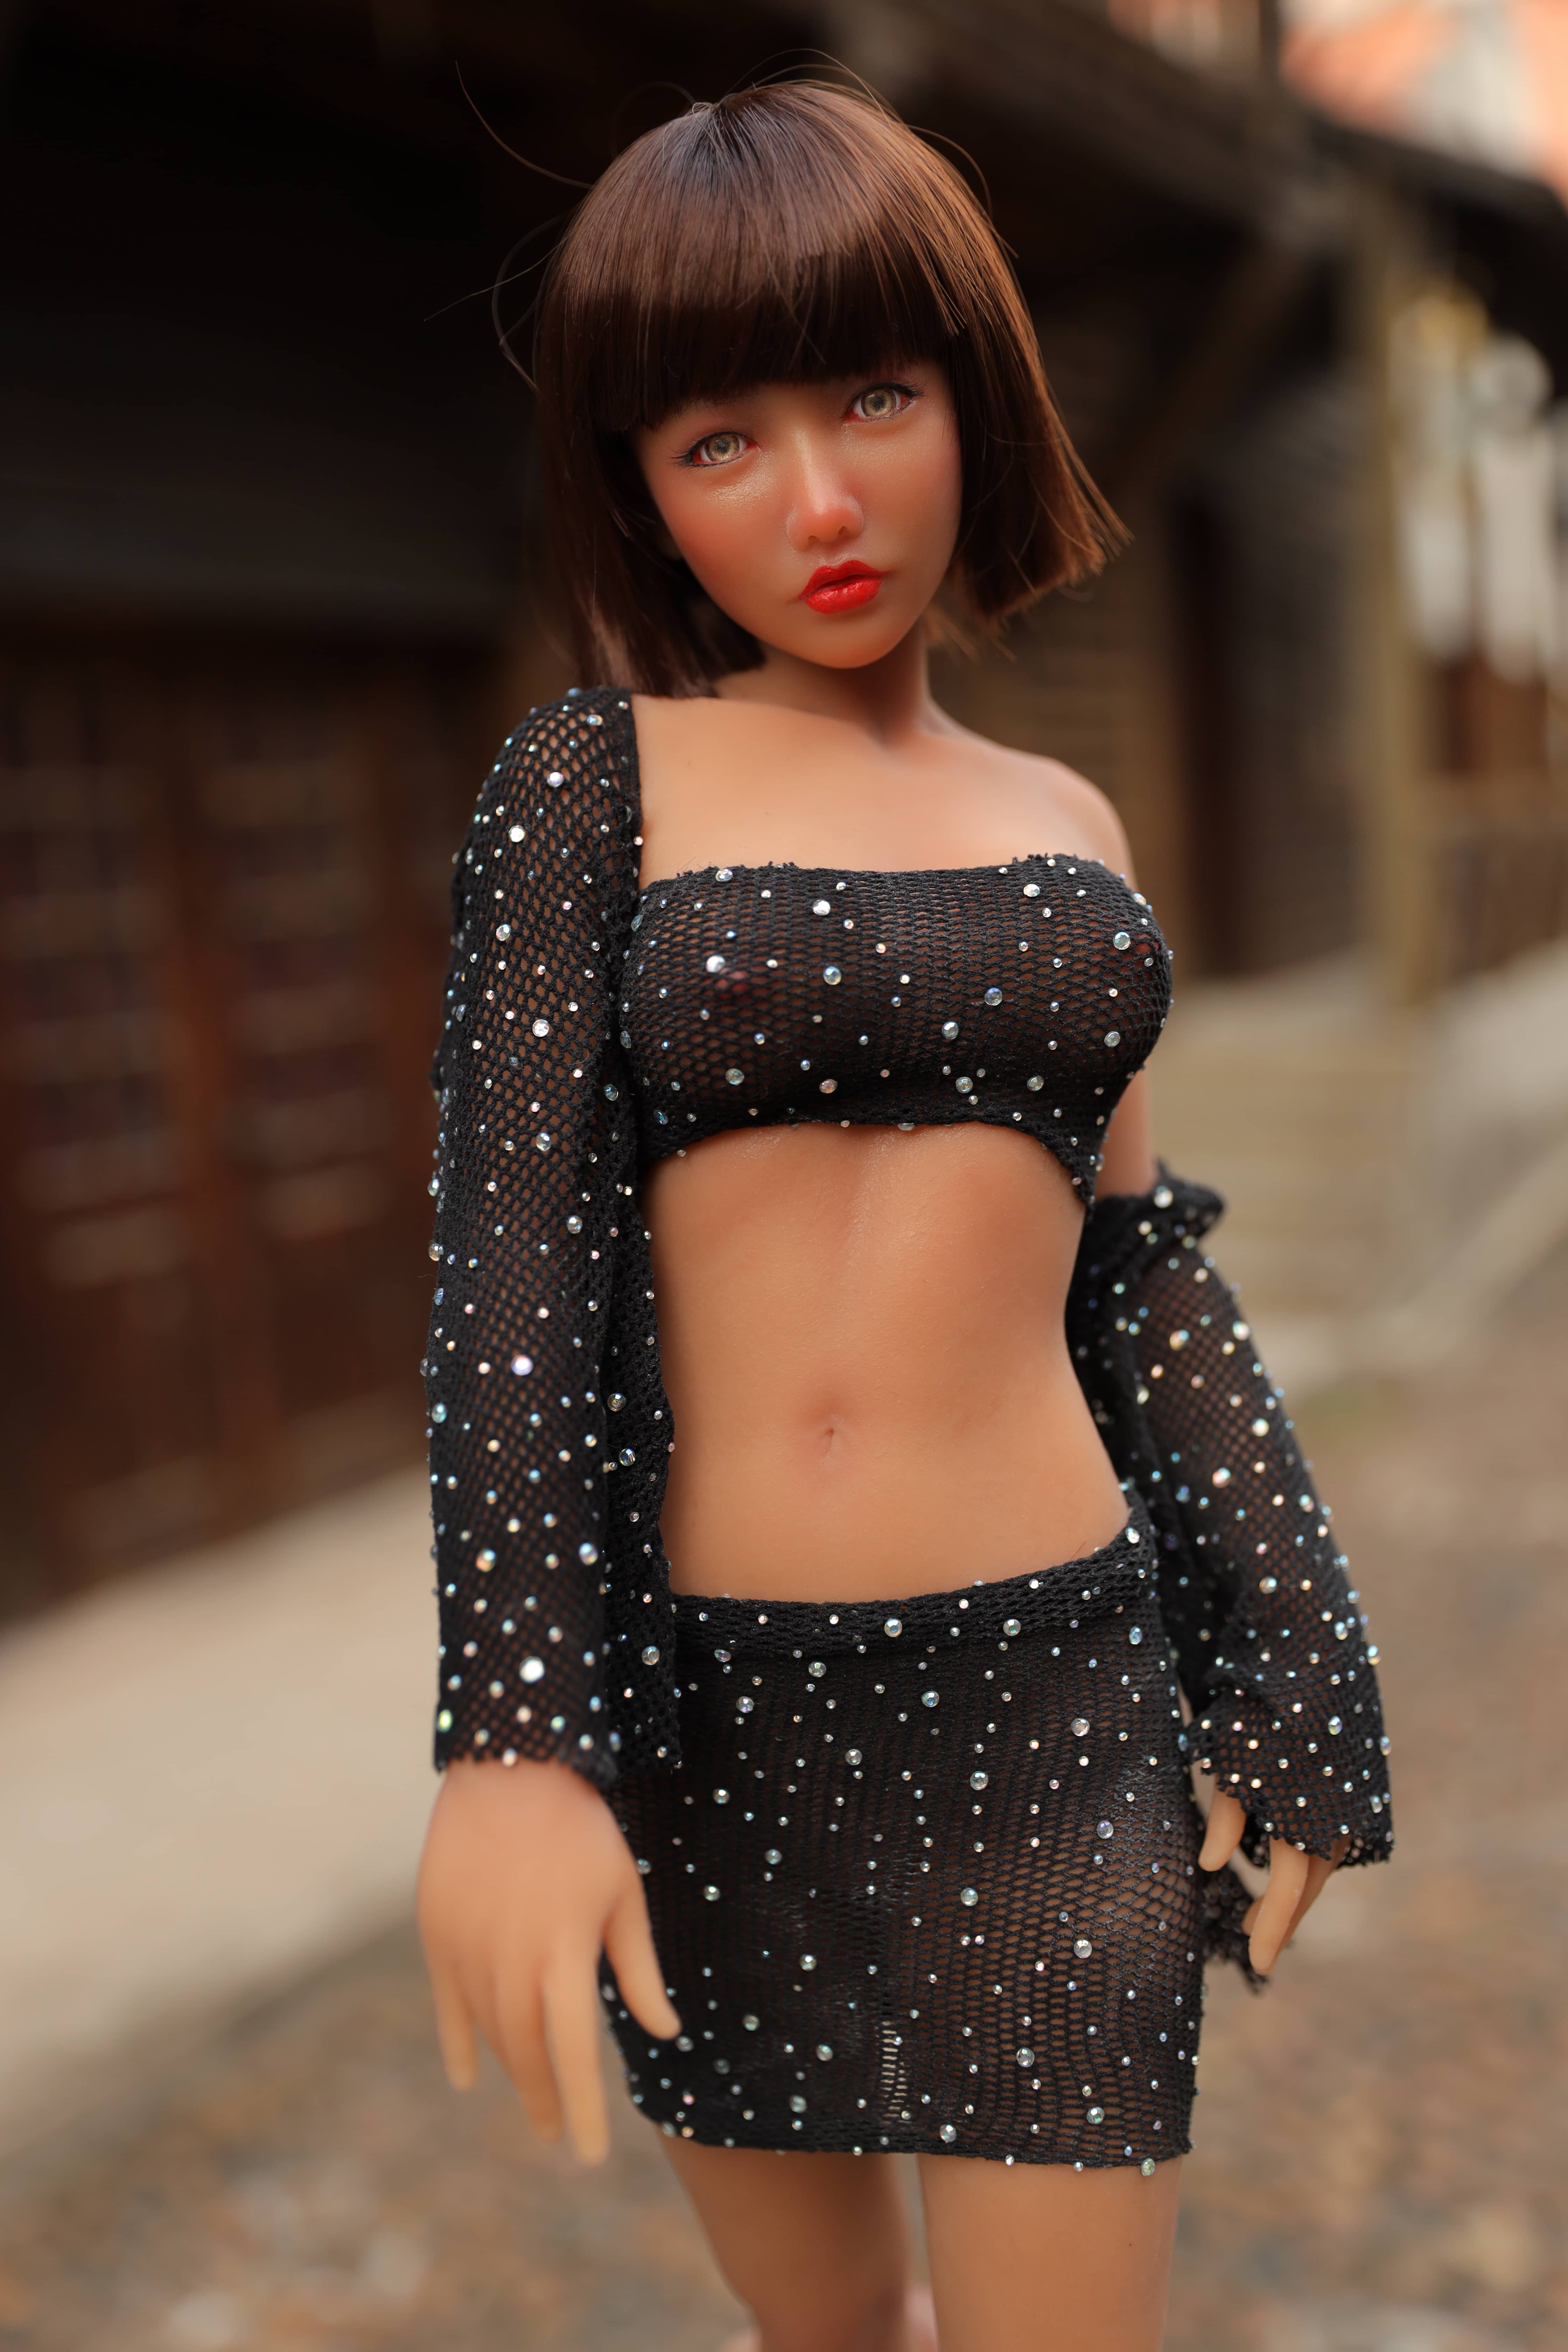 Mini Love Doll Si60cm (1.97') M Raka (Tan) full silicone (NO.922) CLM Littlelovedoll